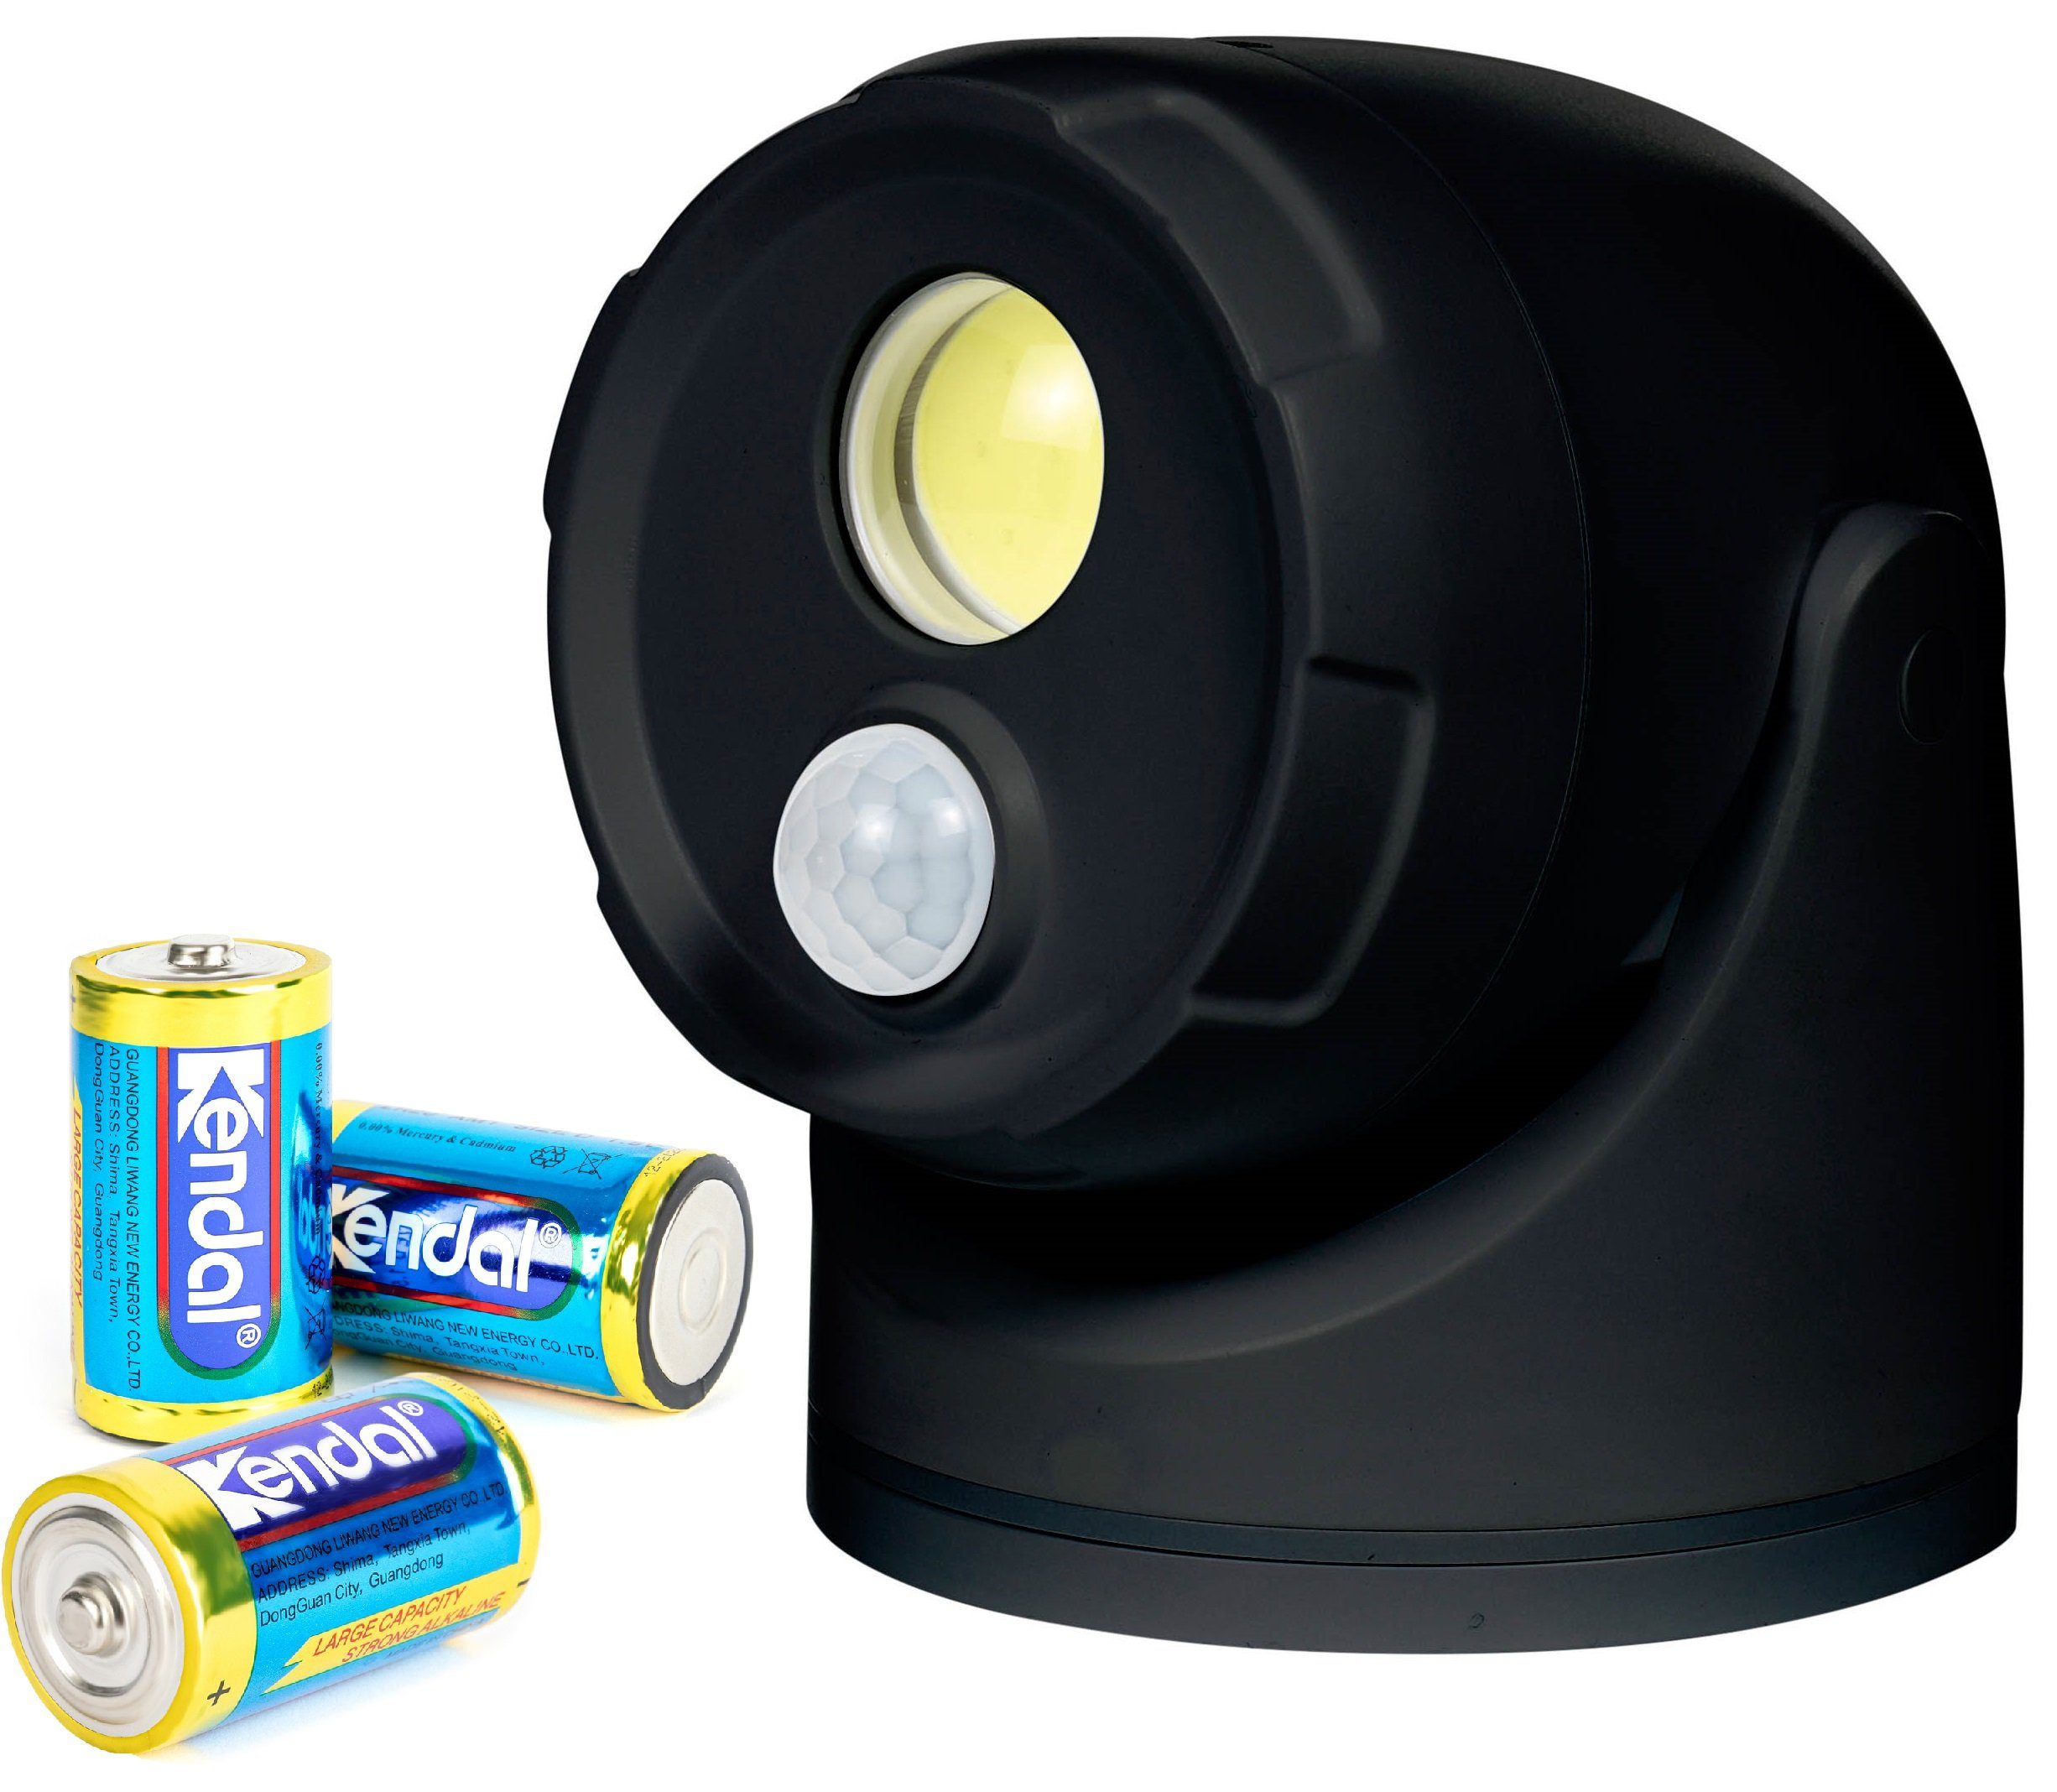 Northpoint Wandstrahler Schwarz mit inkl. Batterie Bewegungsmelder Batterie Strahler Flutlicht D-Batterien LED Spot